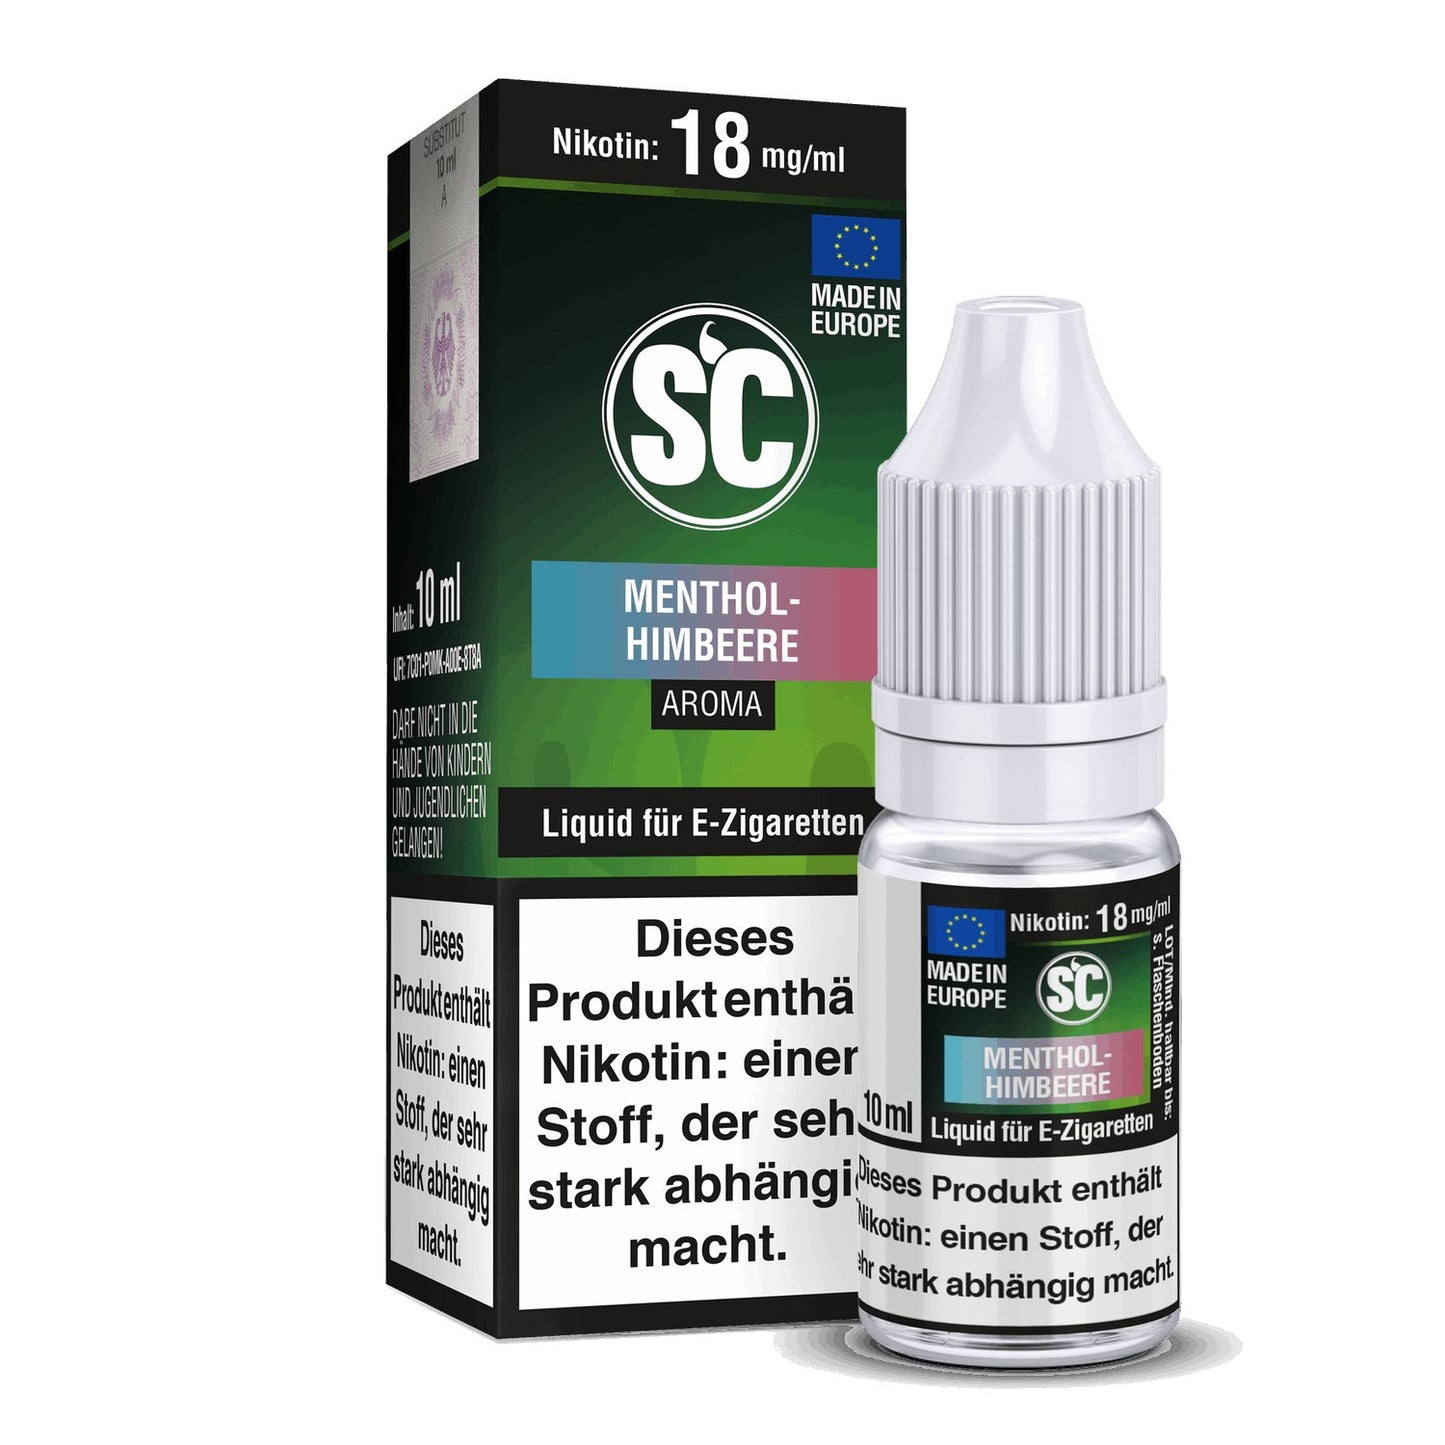 SC - Menthol-Himbeere - 10ml Fertigliquid (Nikotinfrei/Nikotin) - 1er Packung 12 mg/ml - Vapes4you